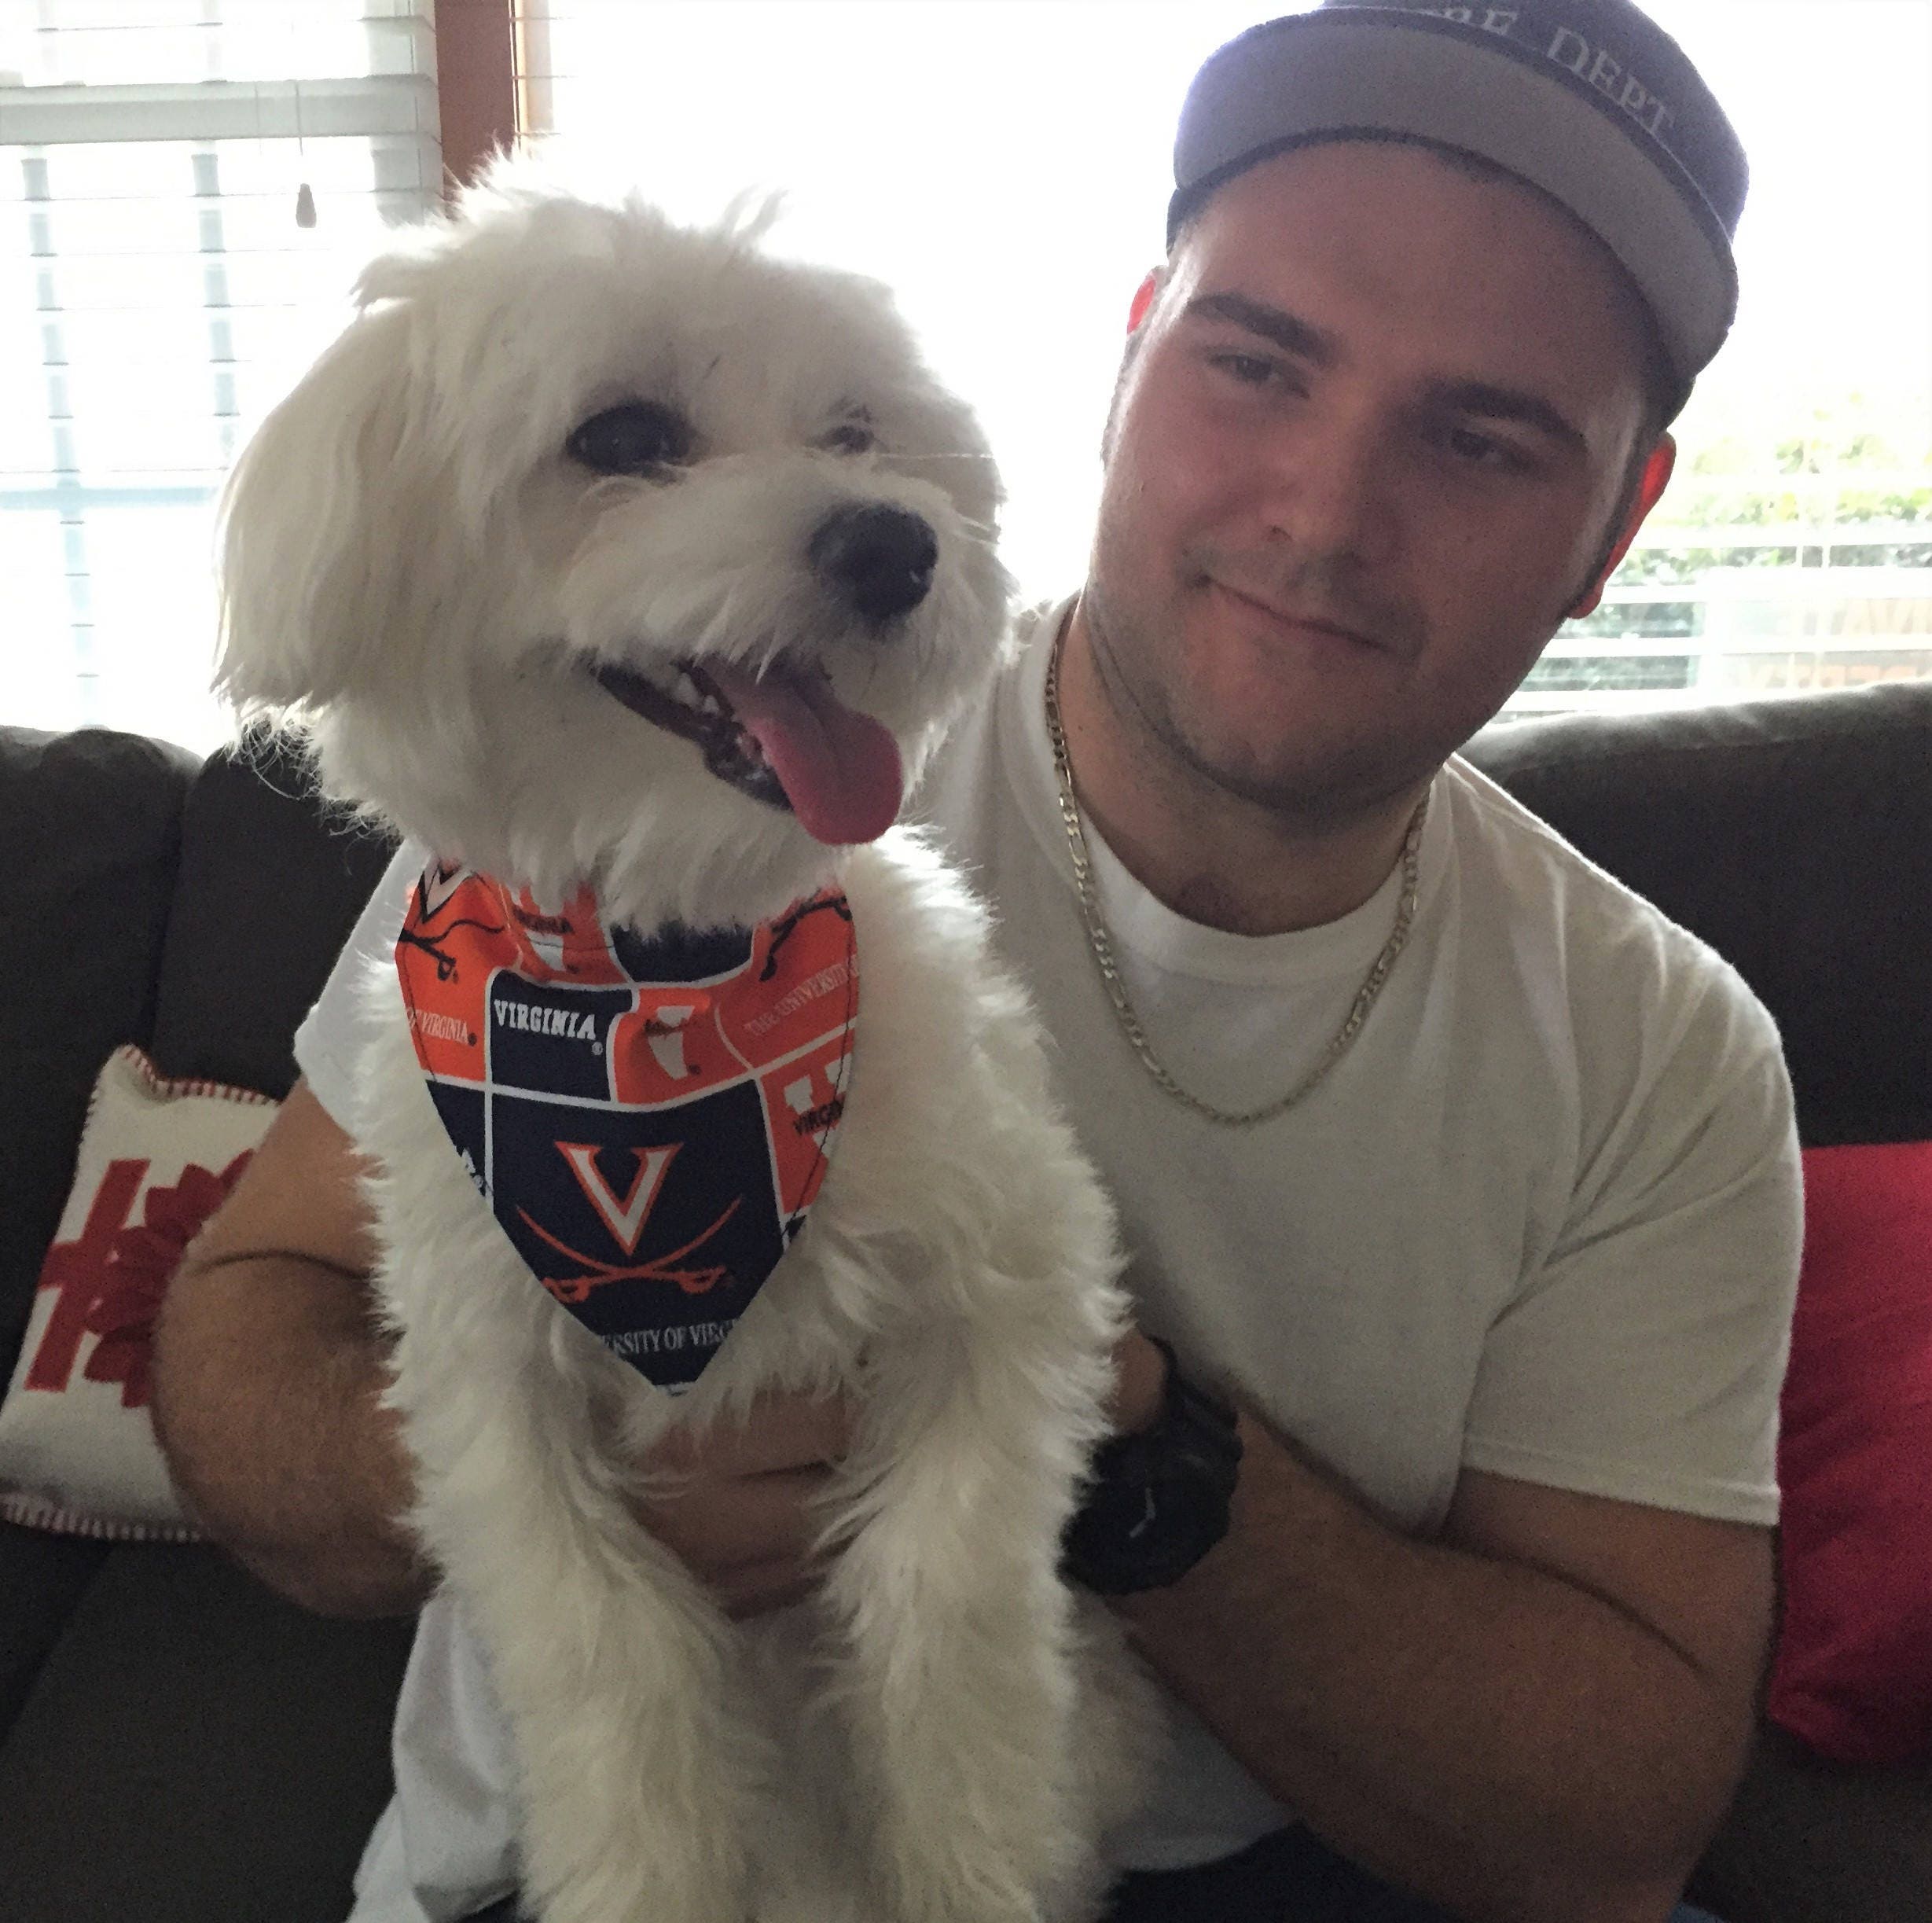 Medium University of Virginia Cavaliers Dog Bandana 